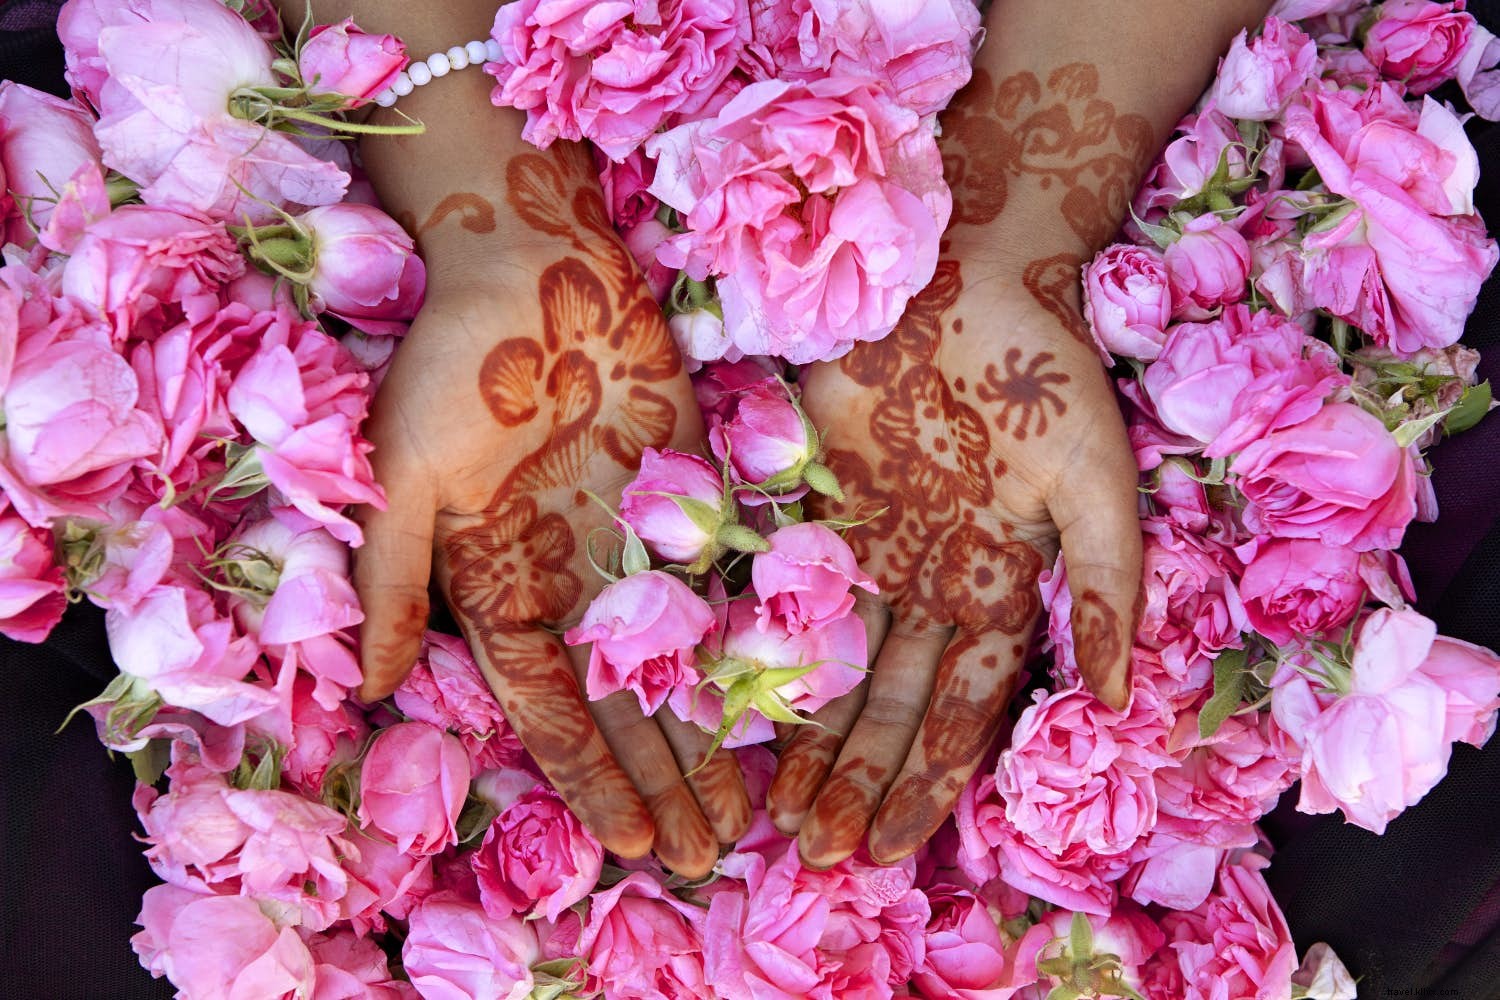 Vale das Rosas:descubra o festival floral de Marrocos 